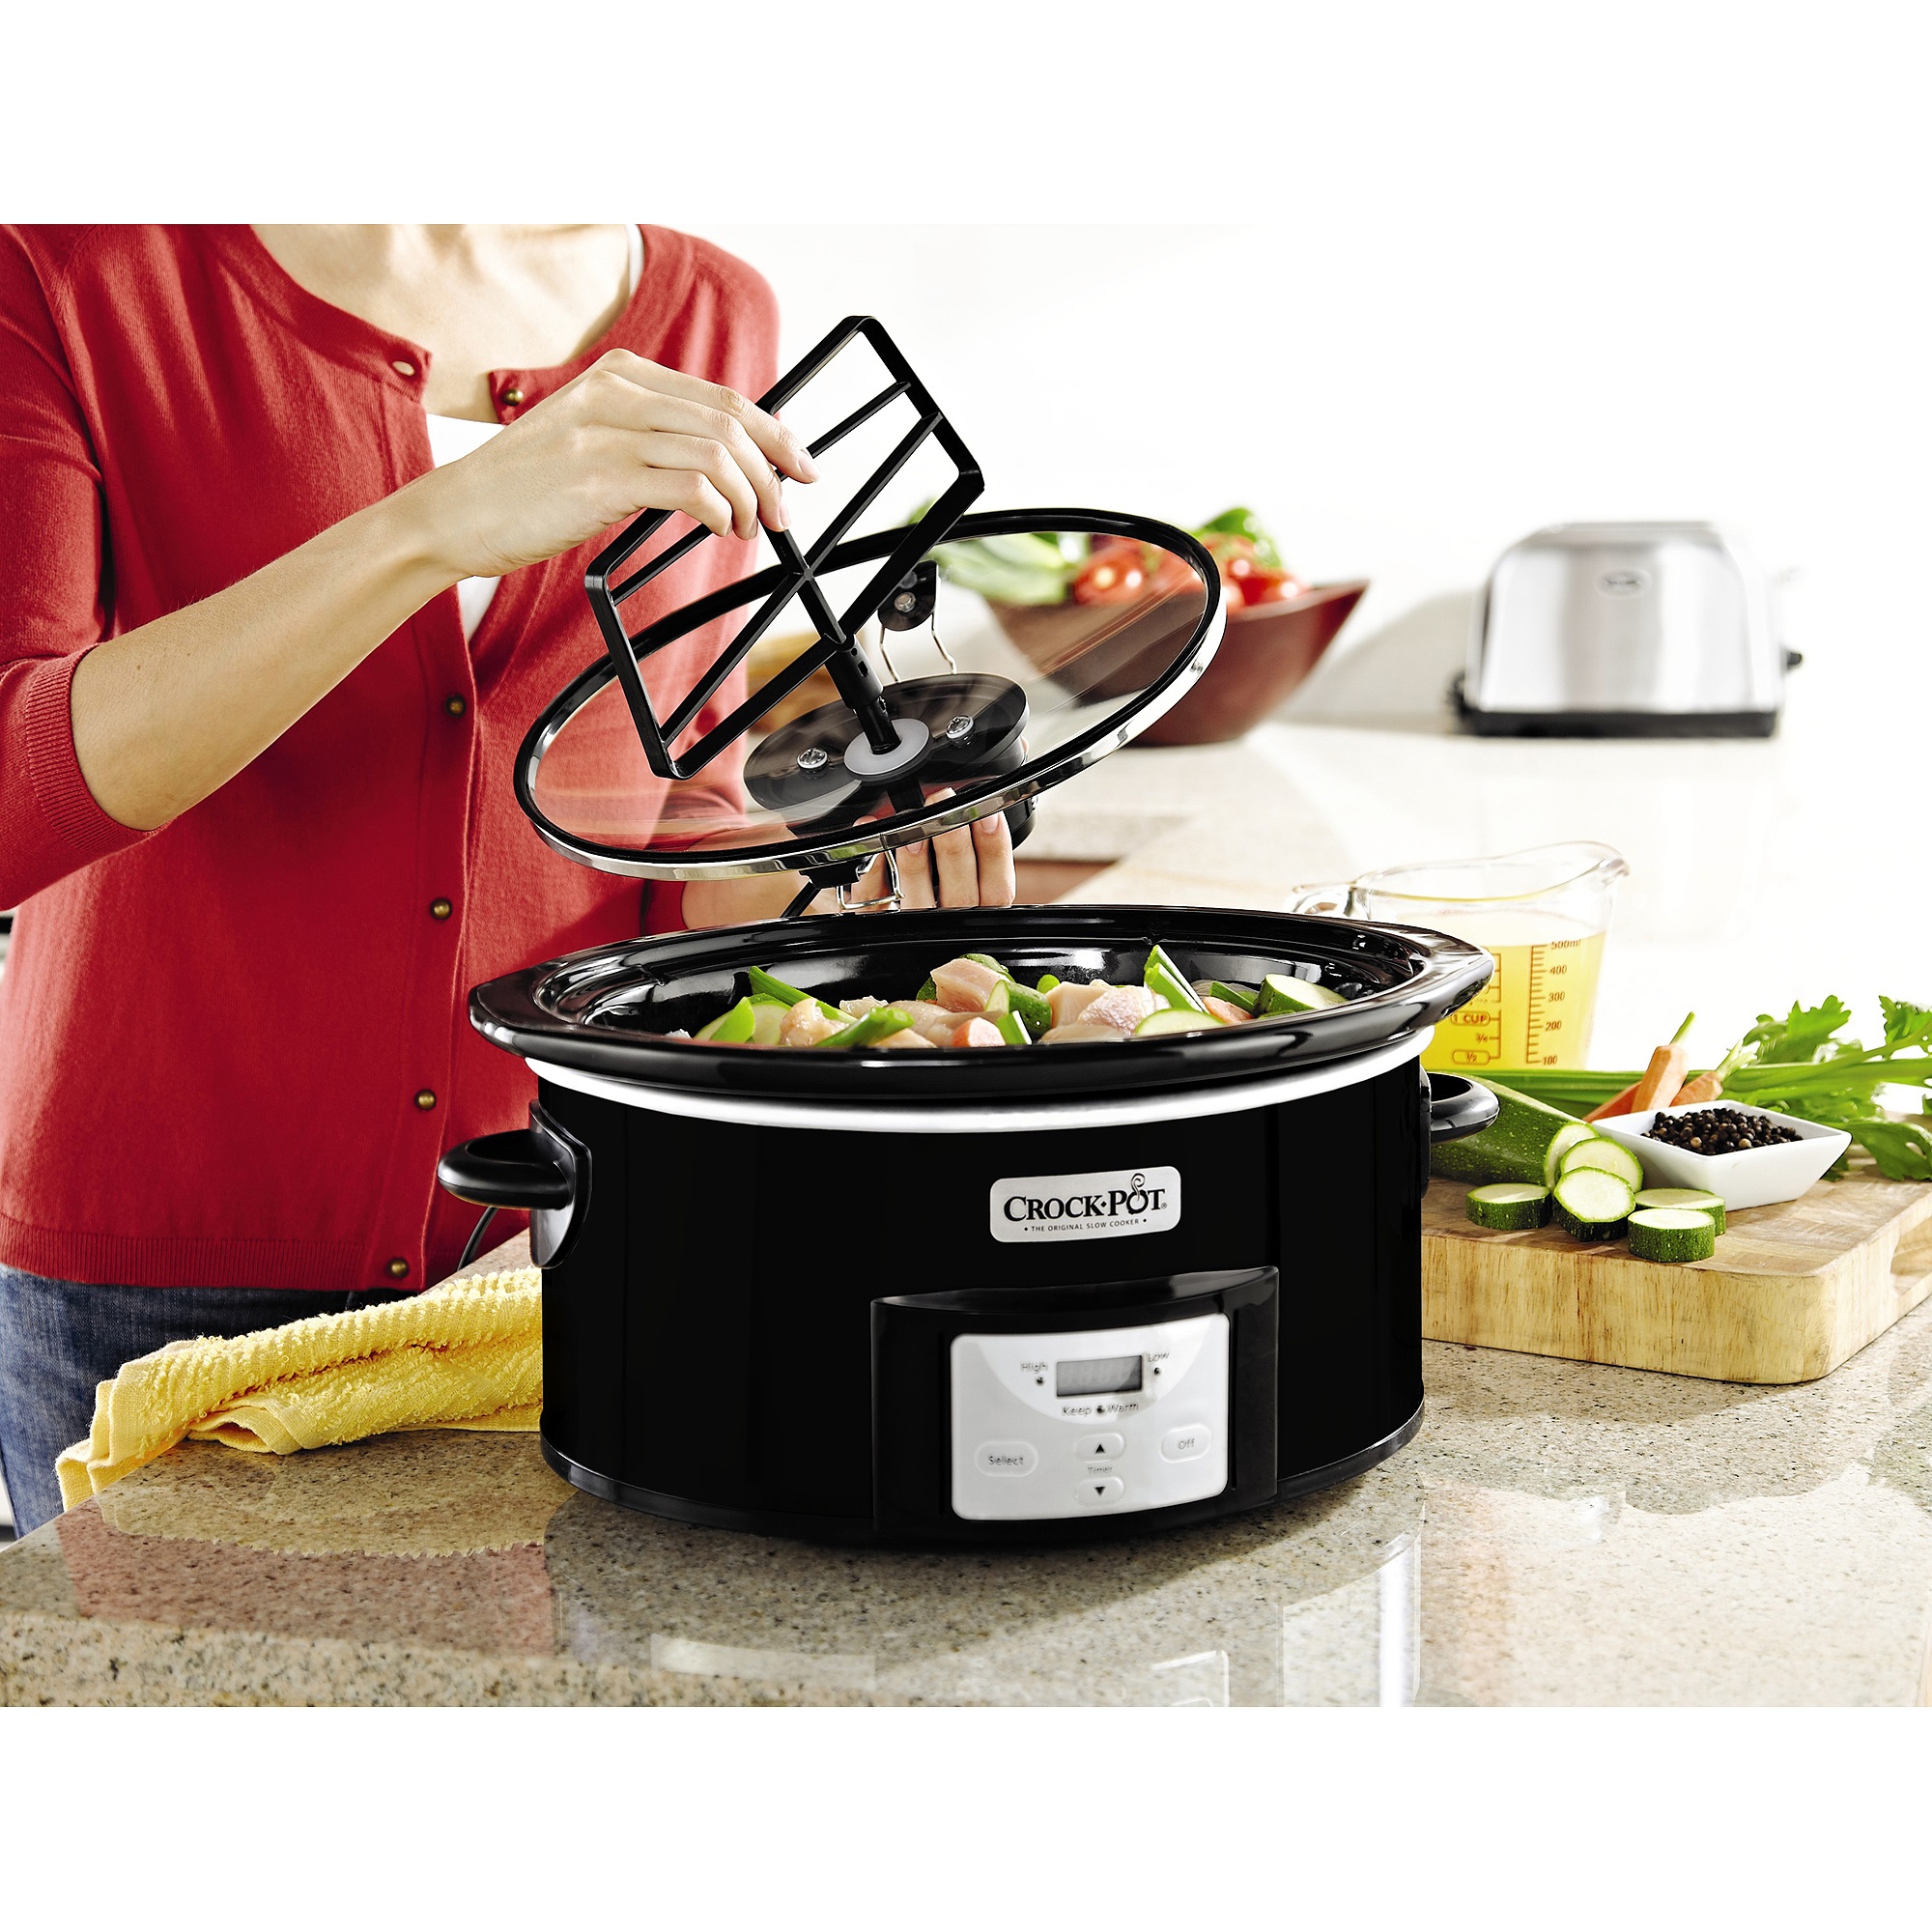 Crock-Pot Stir Automatic Stirring Slow Cooker, 6-Quart, Black - image 3 of 8